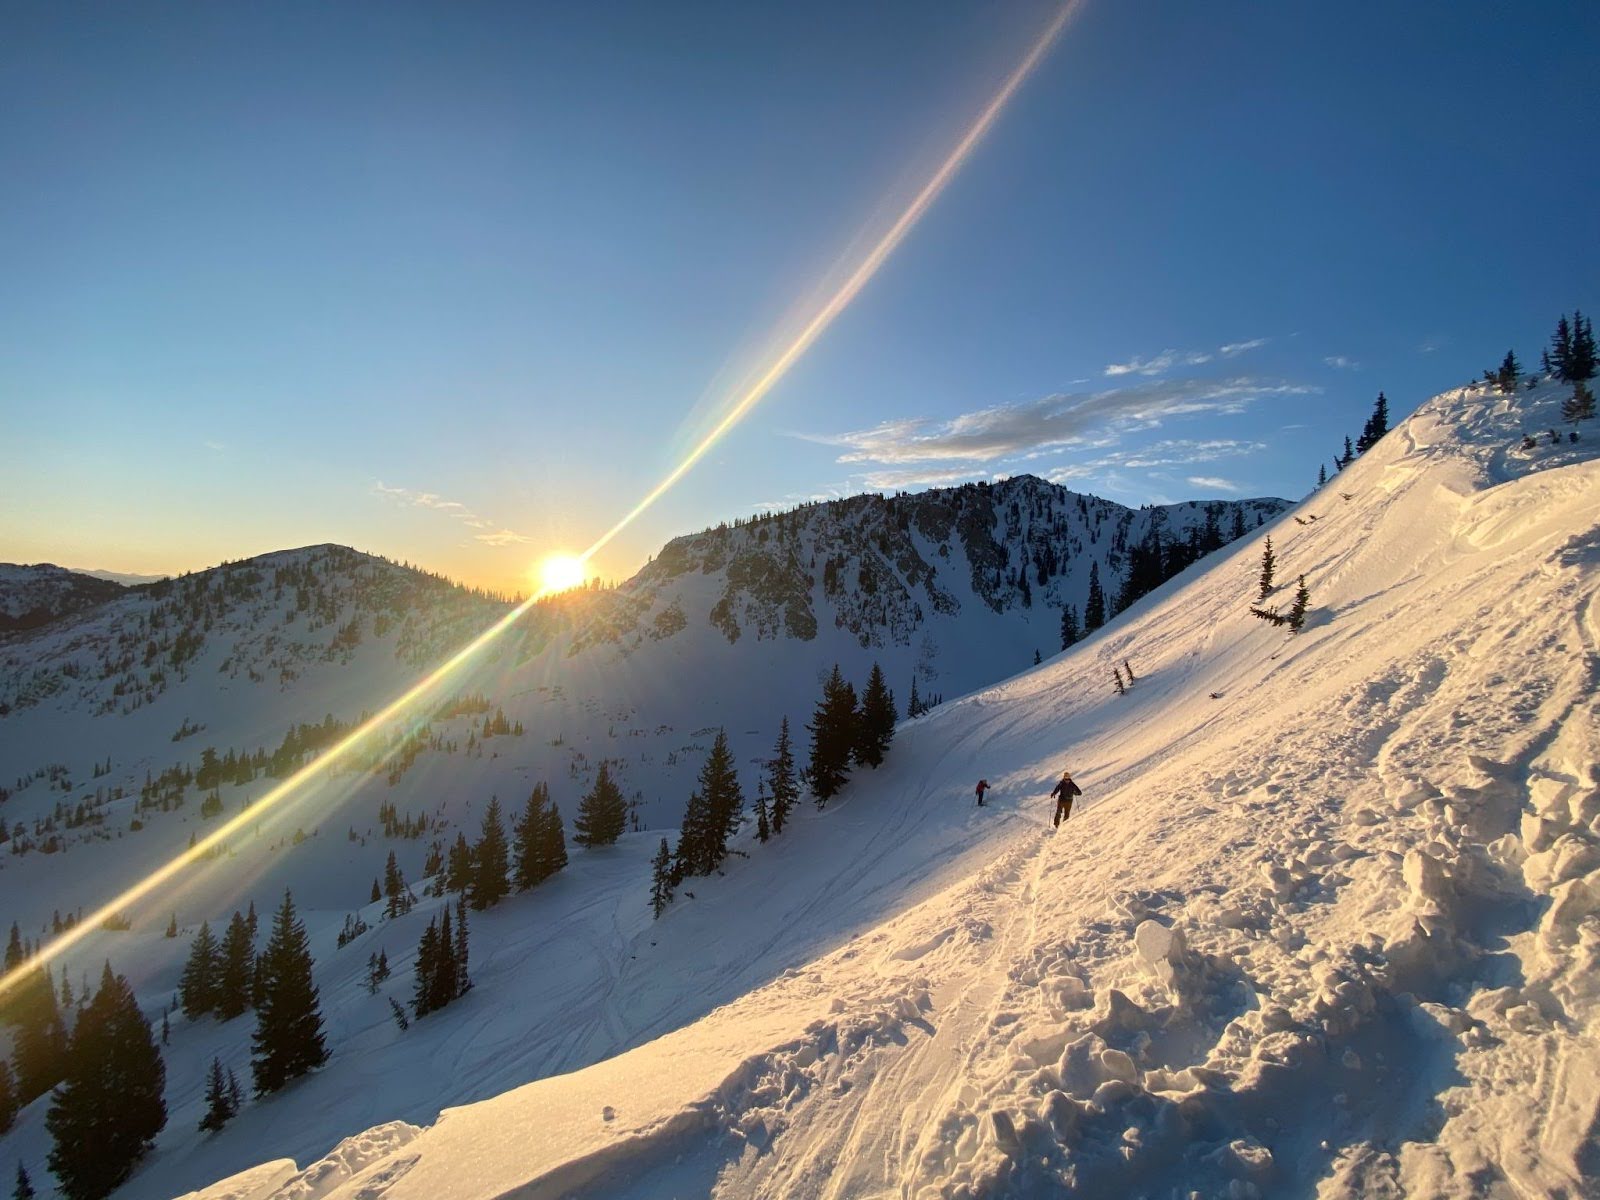 People skiing on a mountain as the sun is peeking over it